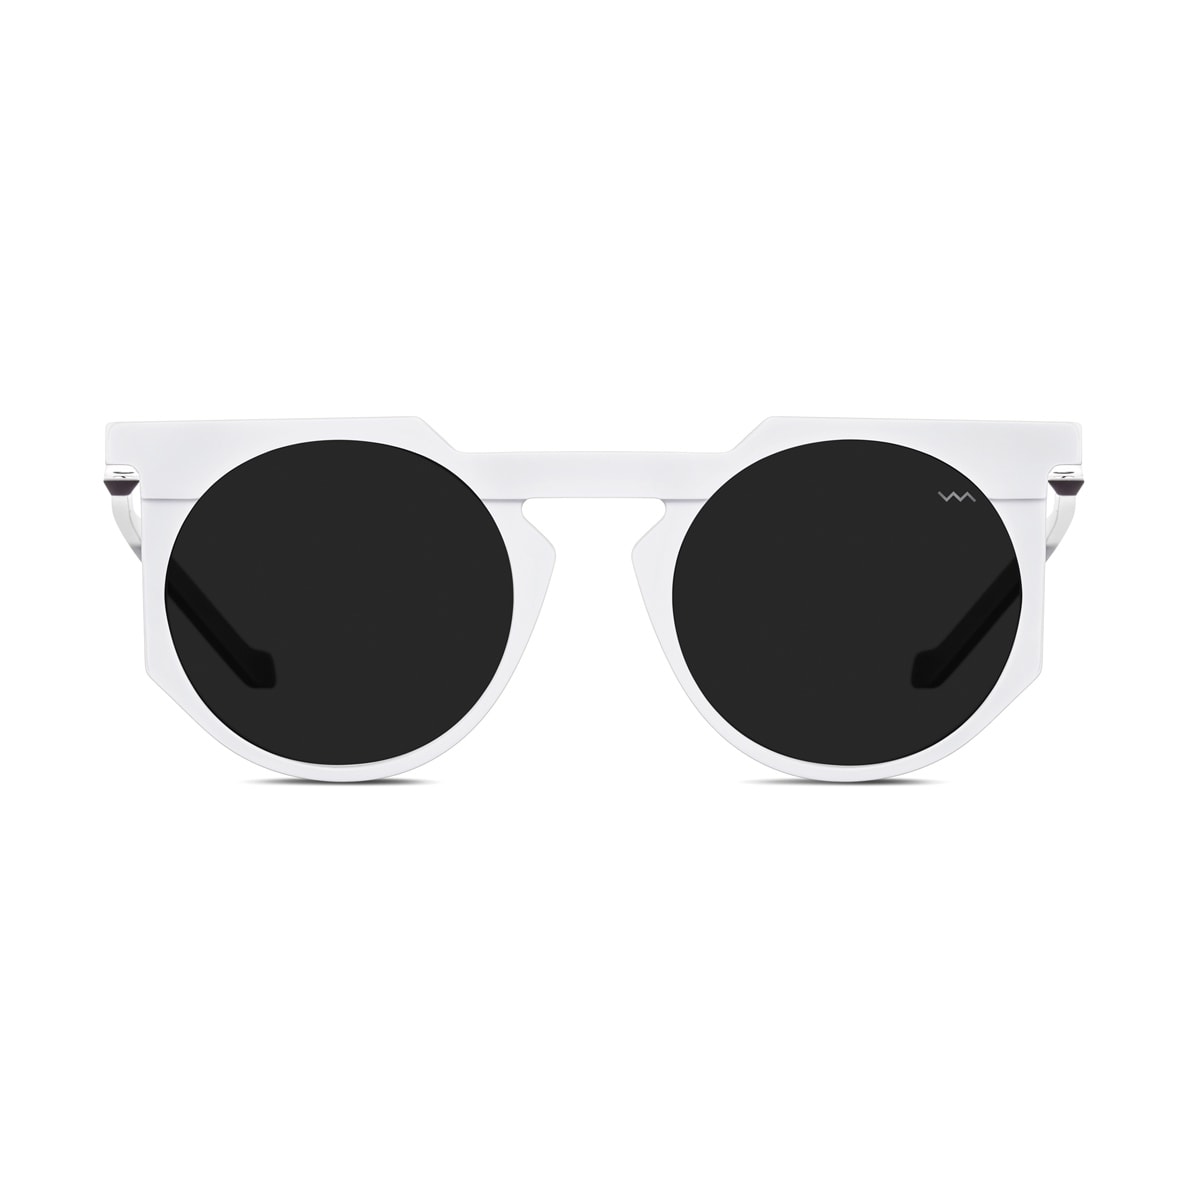 Wl0026 White Label White Sunglasses